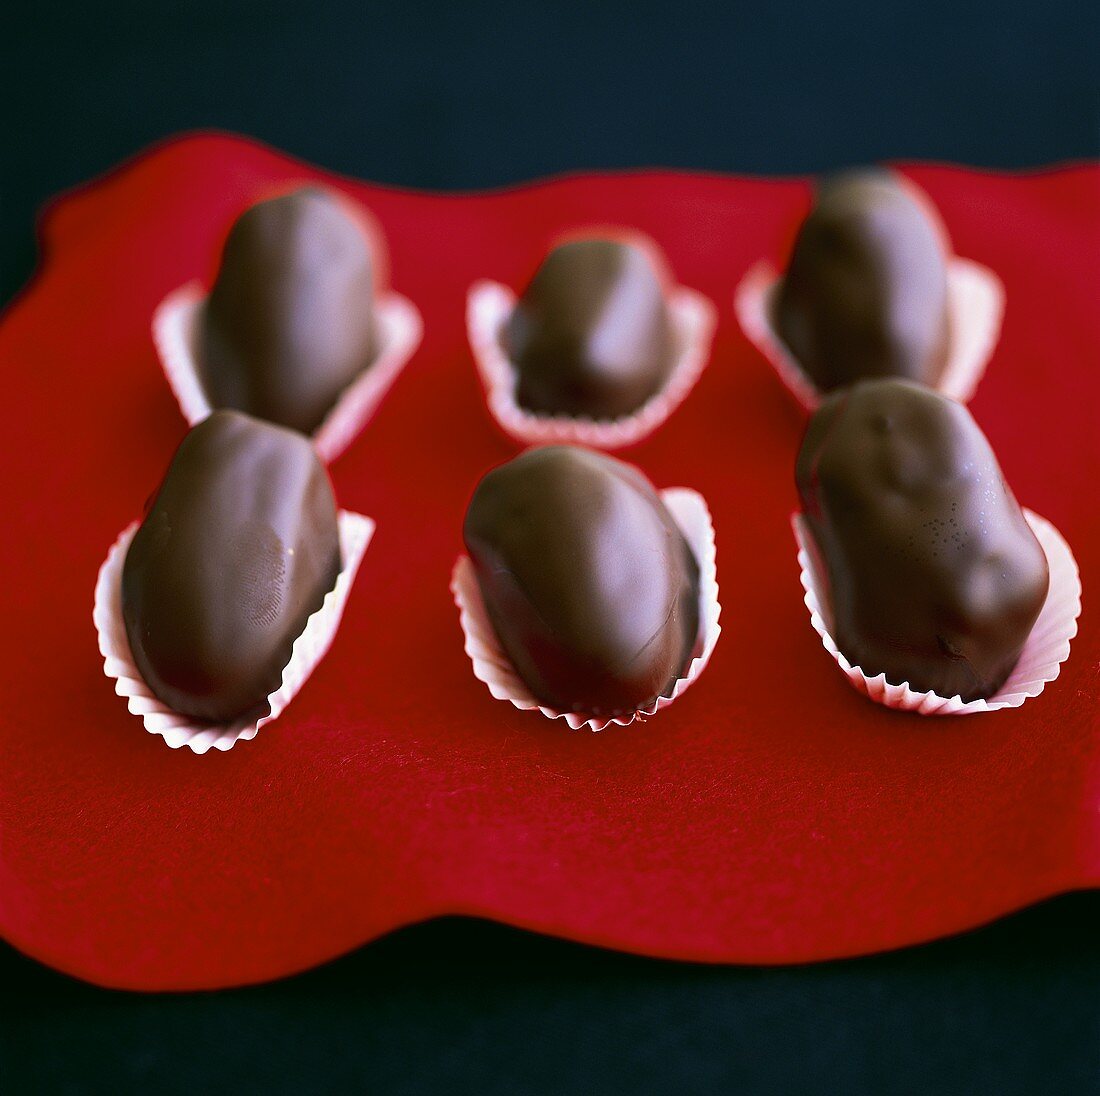 Chocolate-coated dates